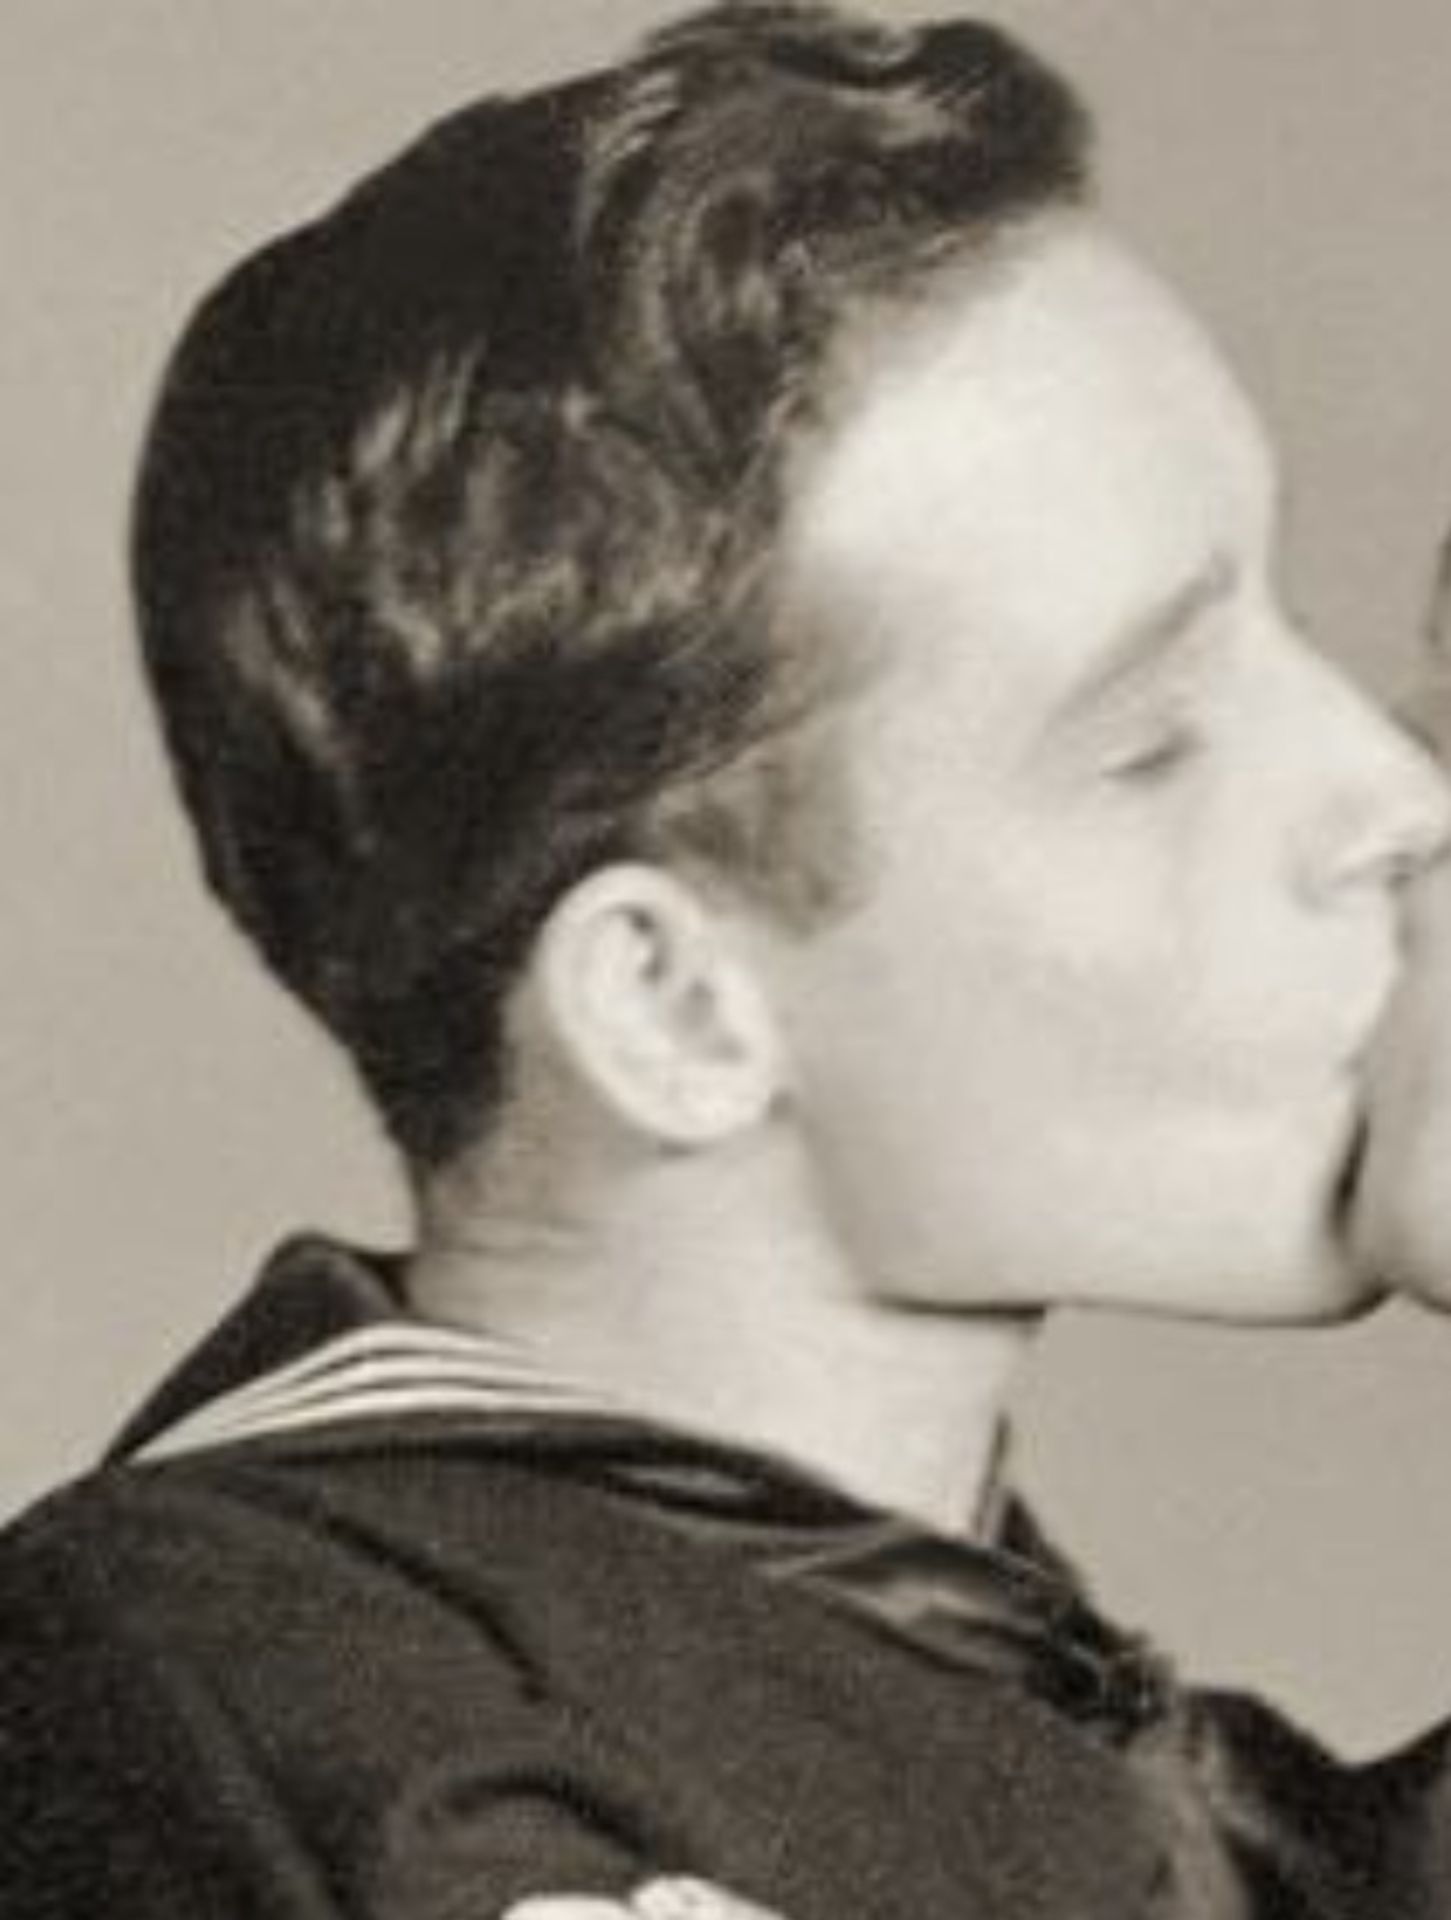 World War II, 1940, Kissing Men - Image 4 of 5